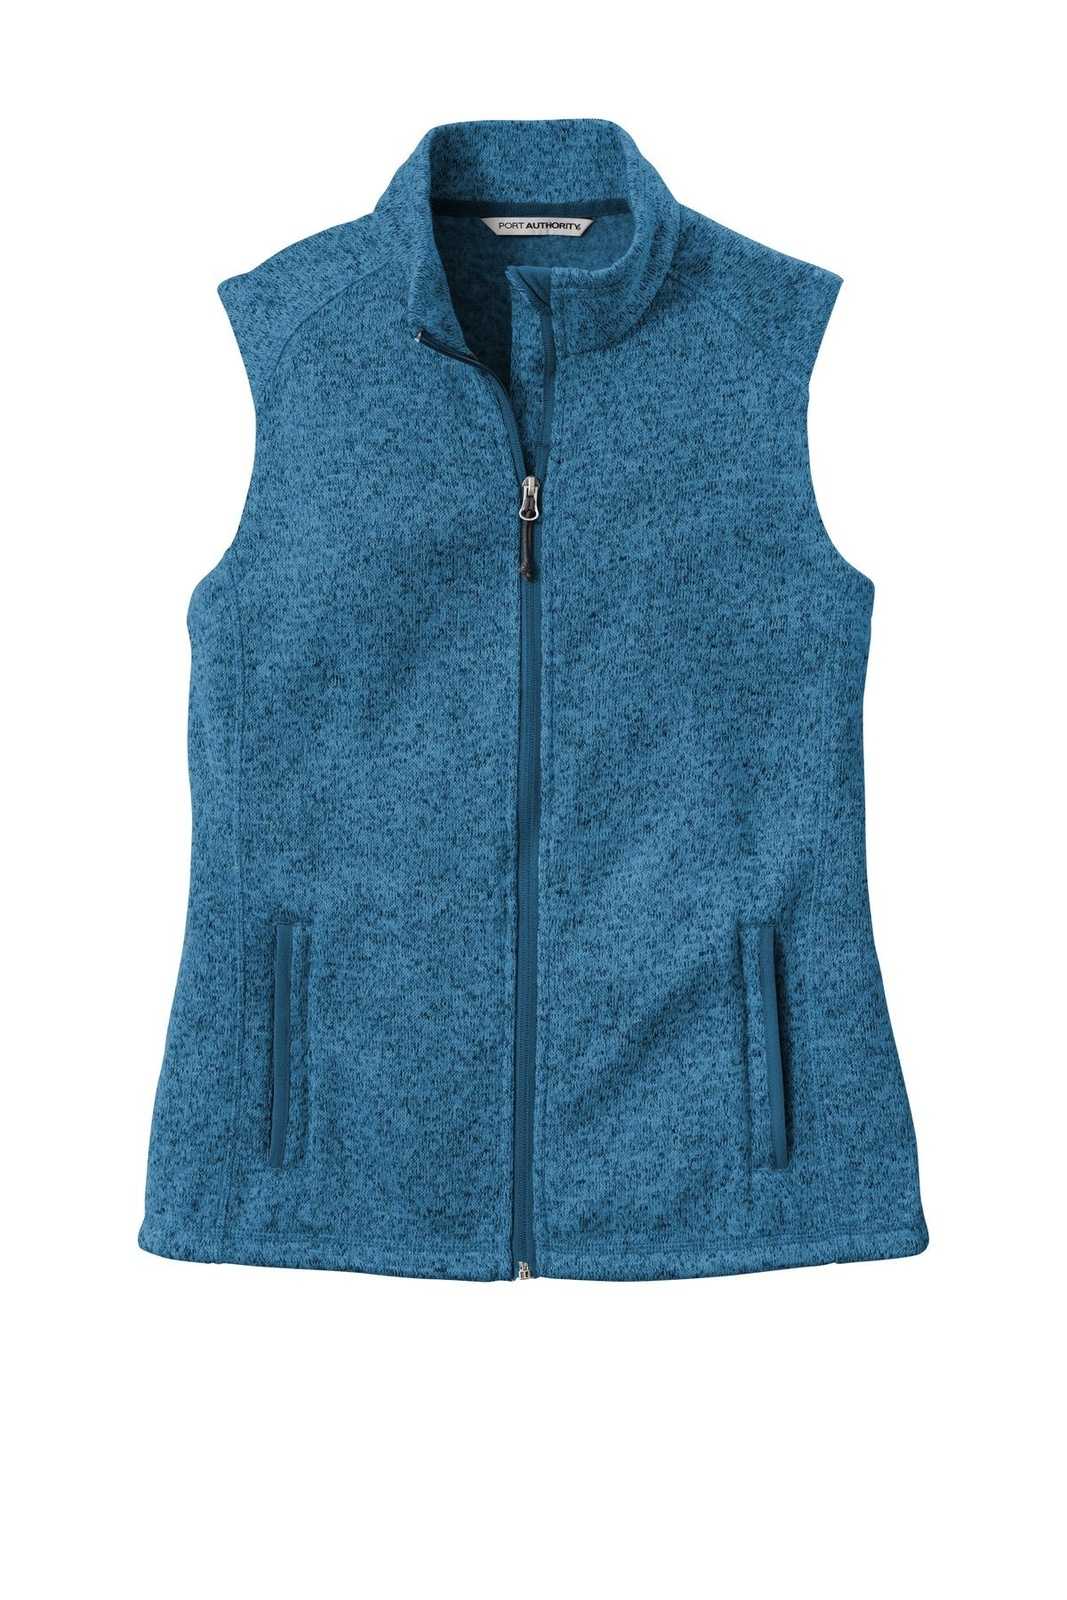 Port Authority L236 Ladies Sweater Fleece Vest - Medium Blue Heather - HIT a Double - 5